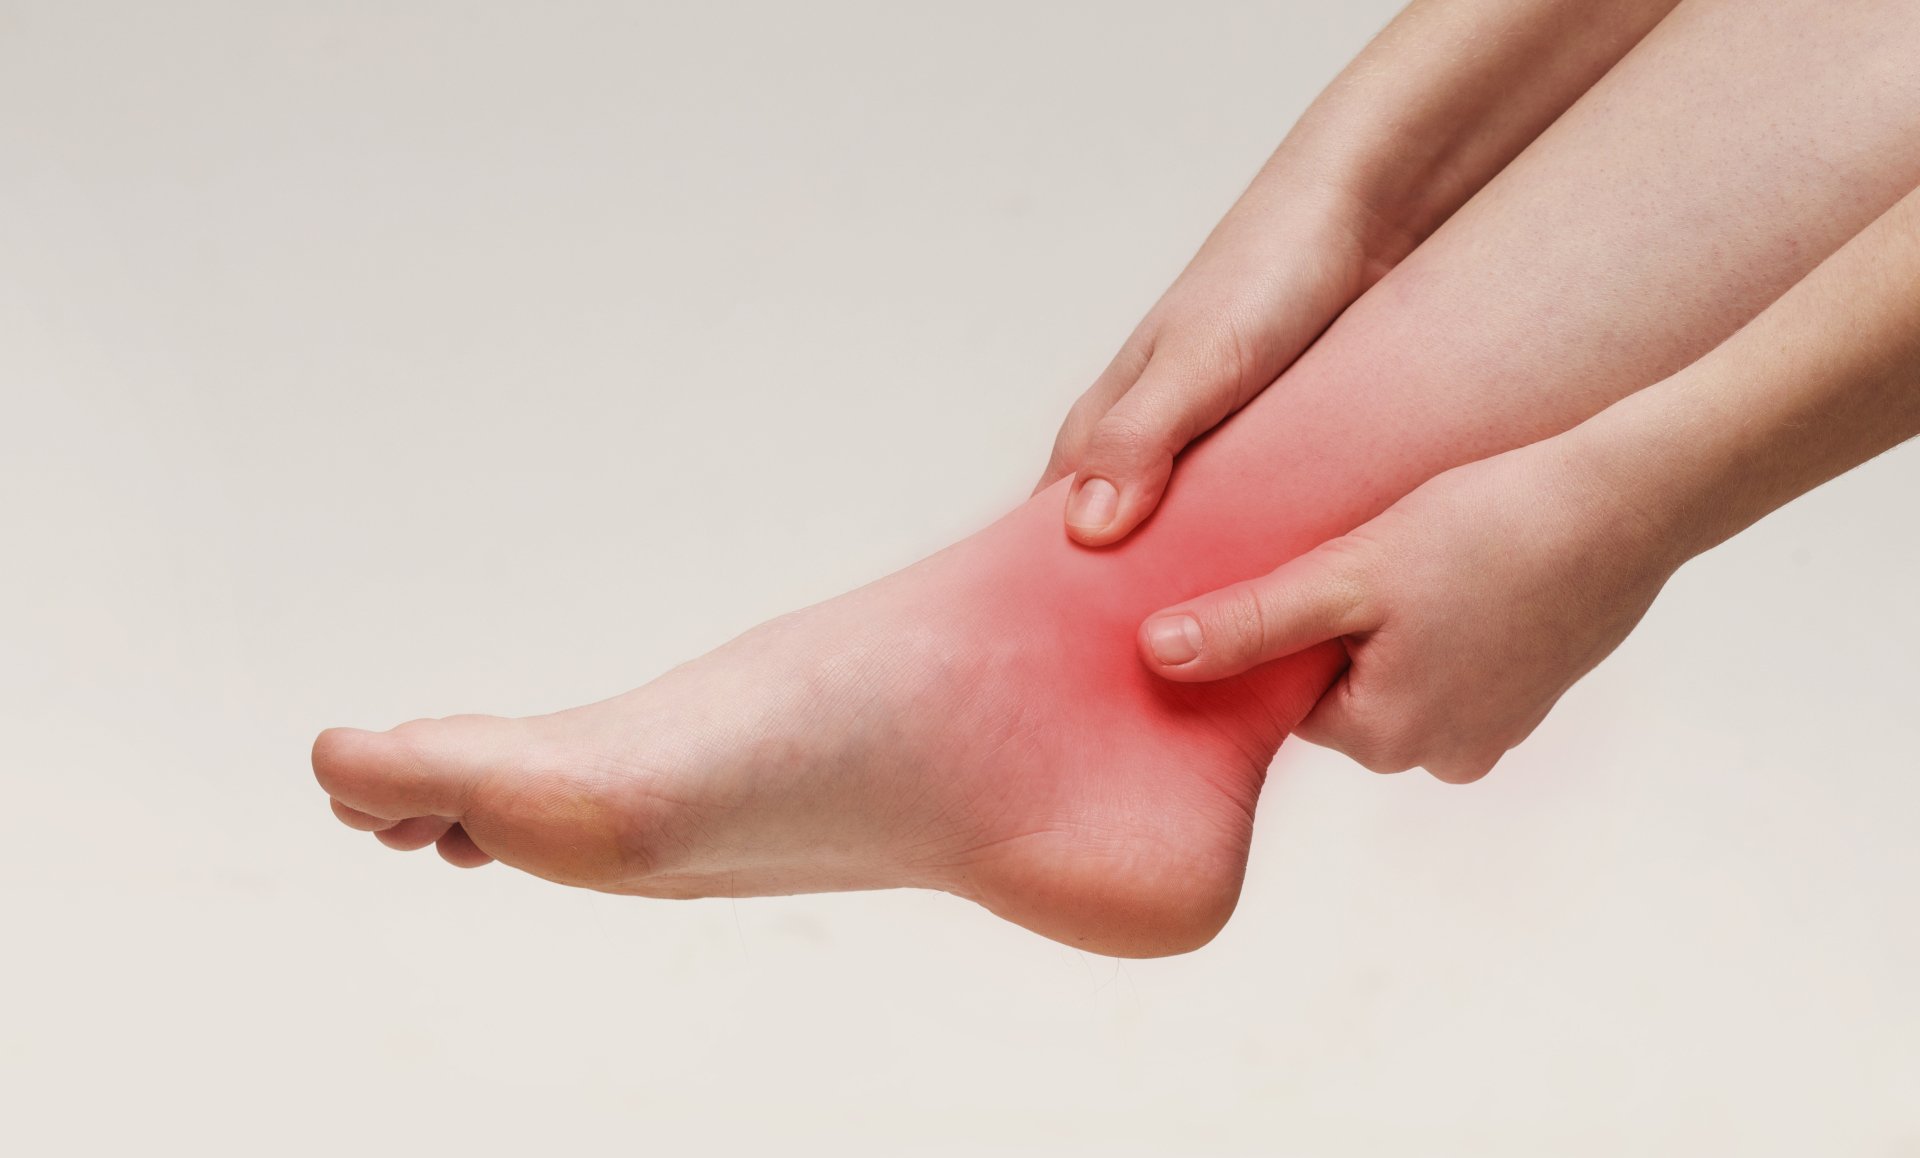 Treatment for Ankle Arthritis